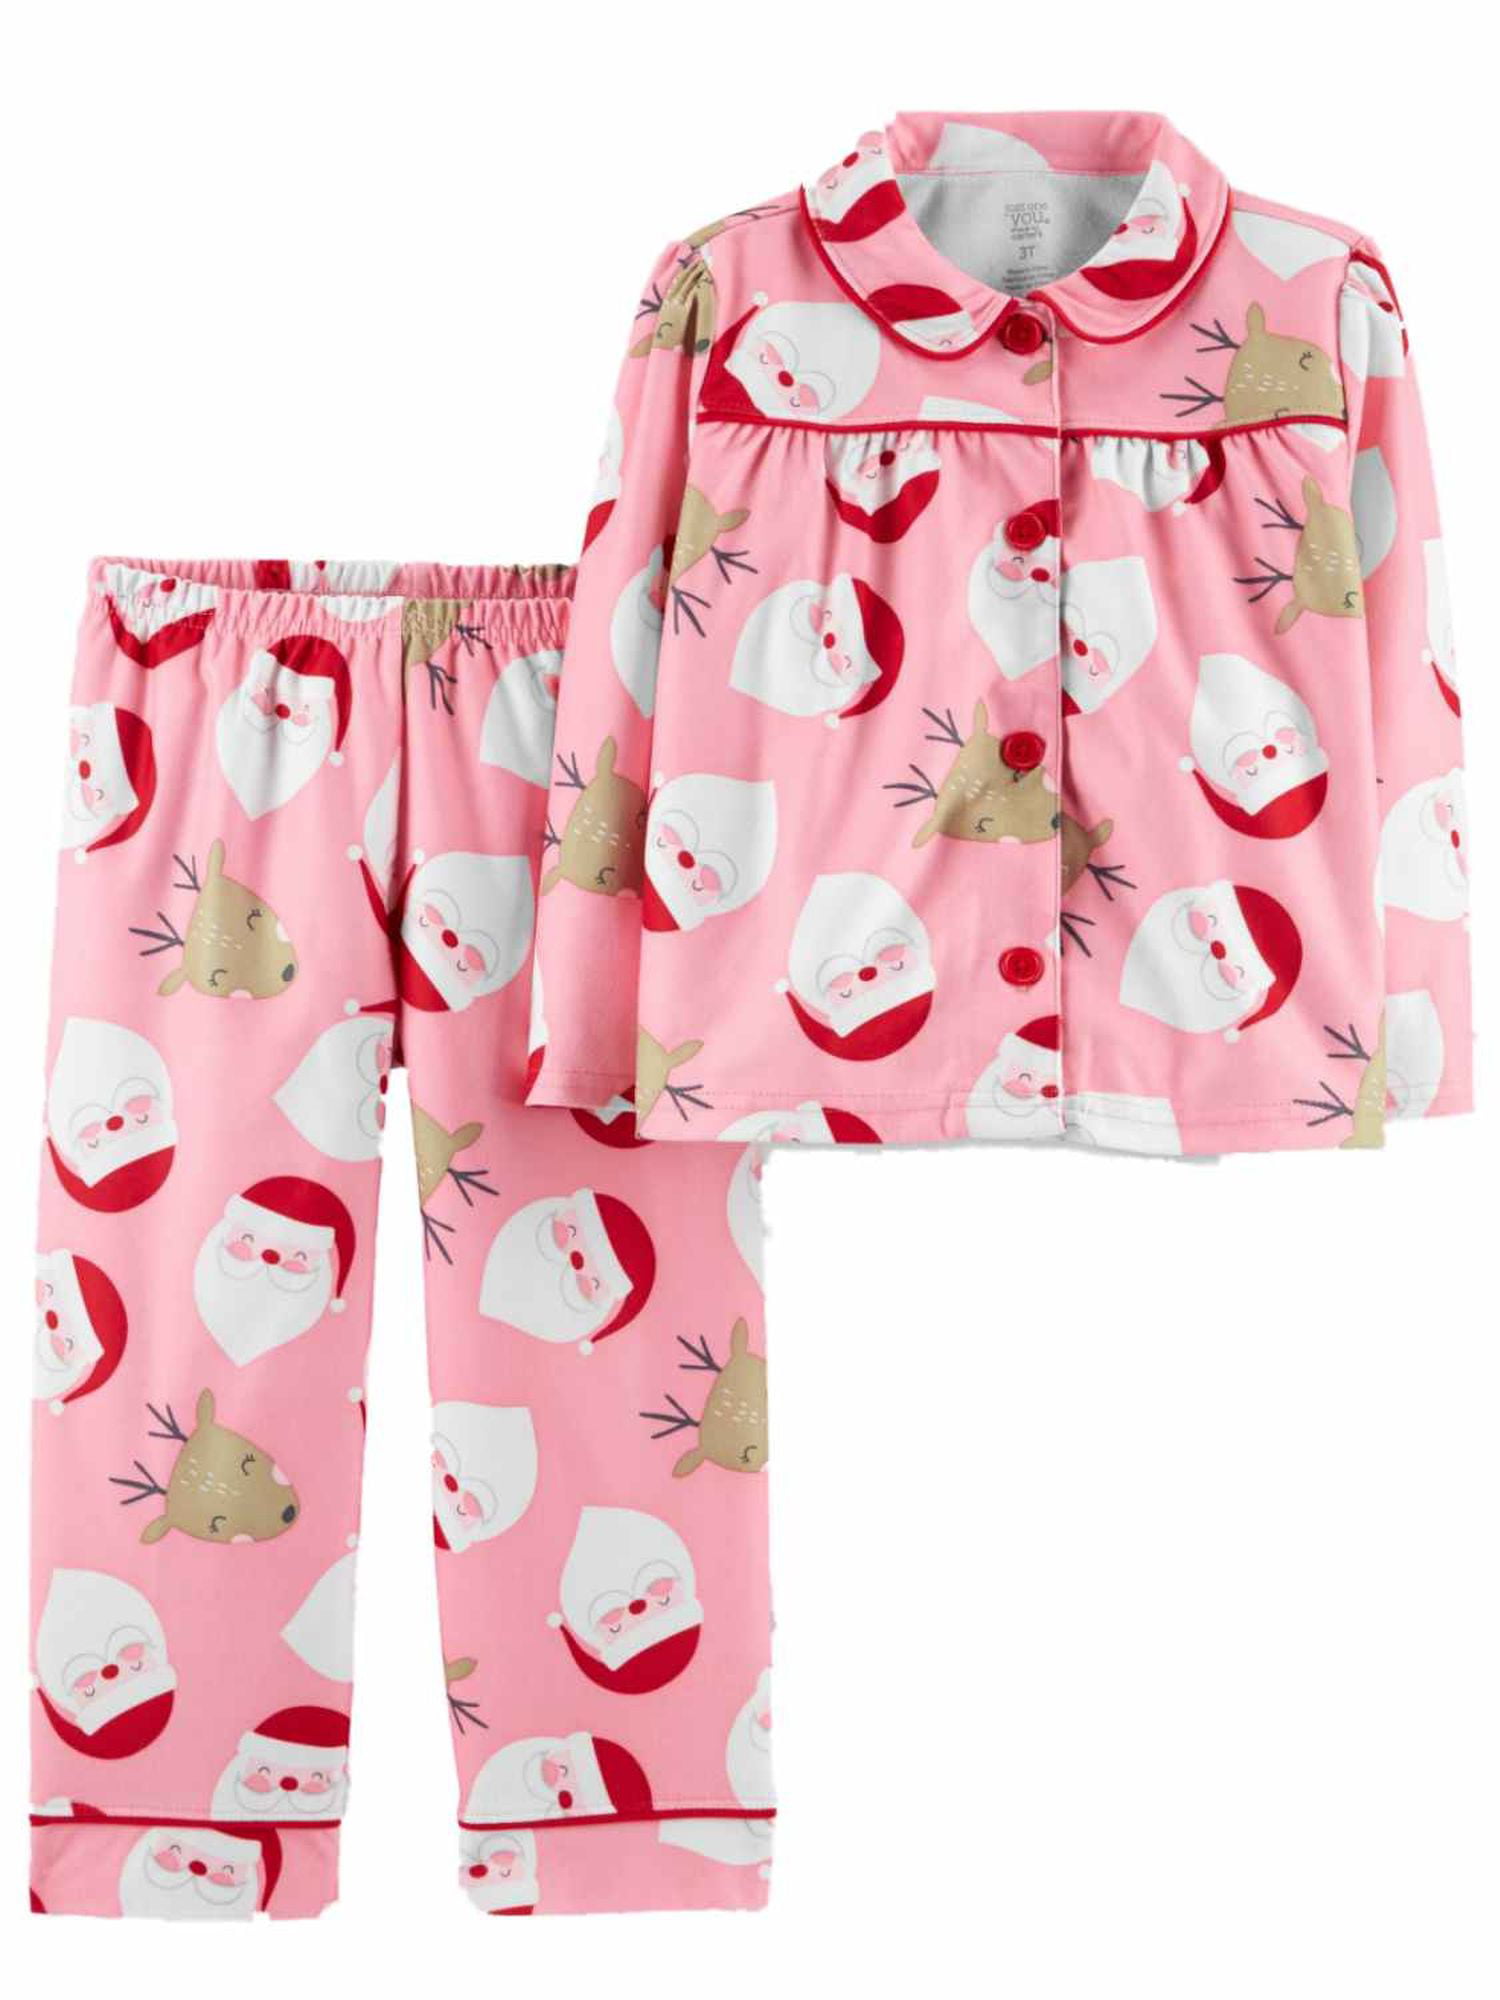 Carter’s Just One You Toddler Girl Pink Christmas Santa Claus Pajamas 18 mths 3T 